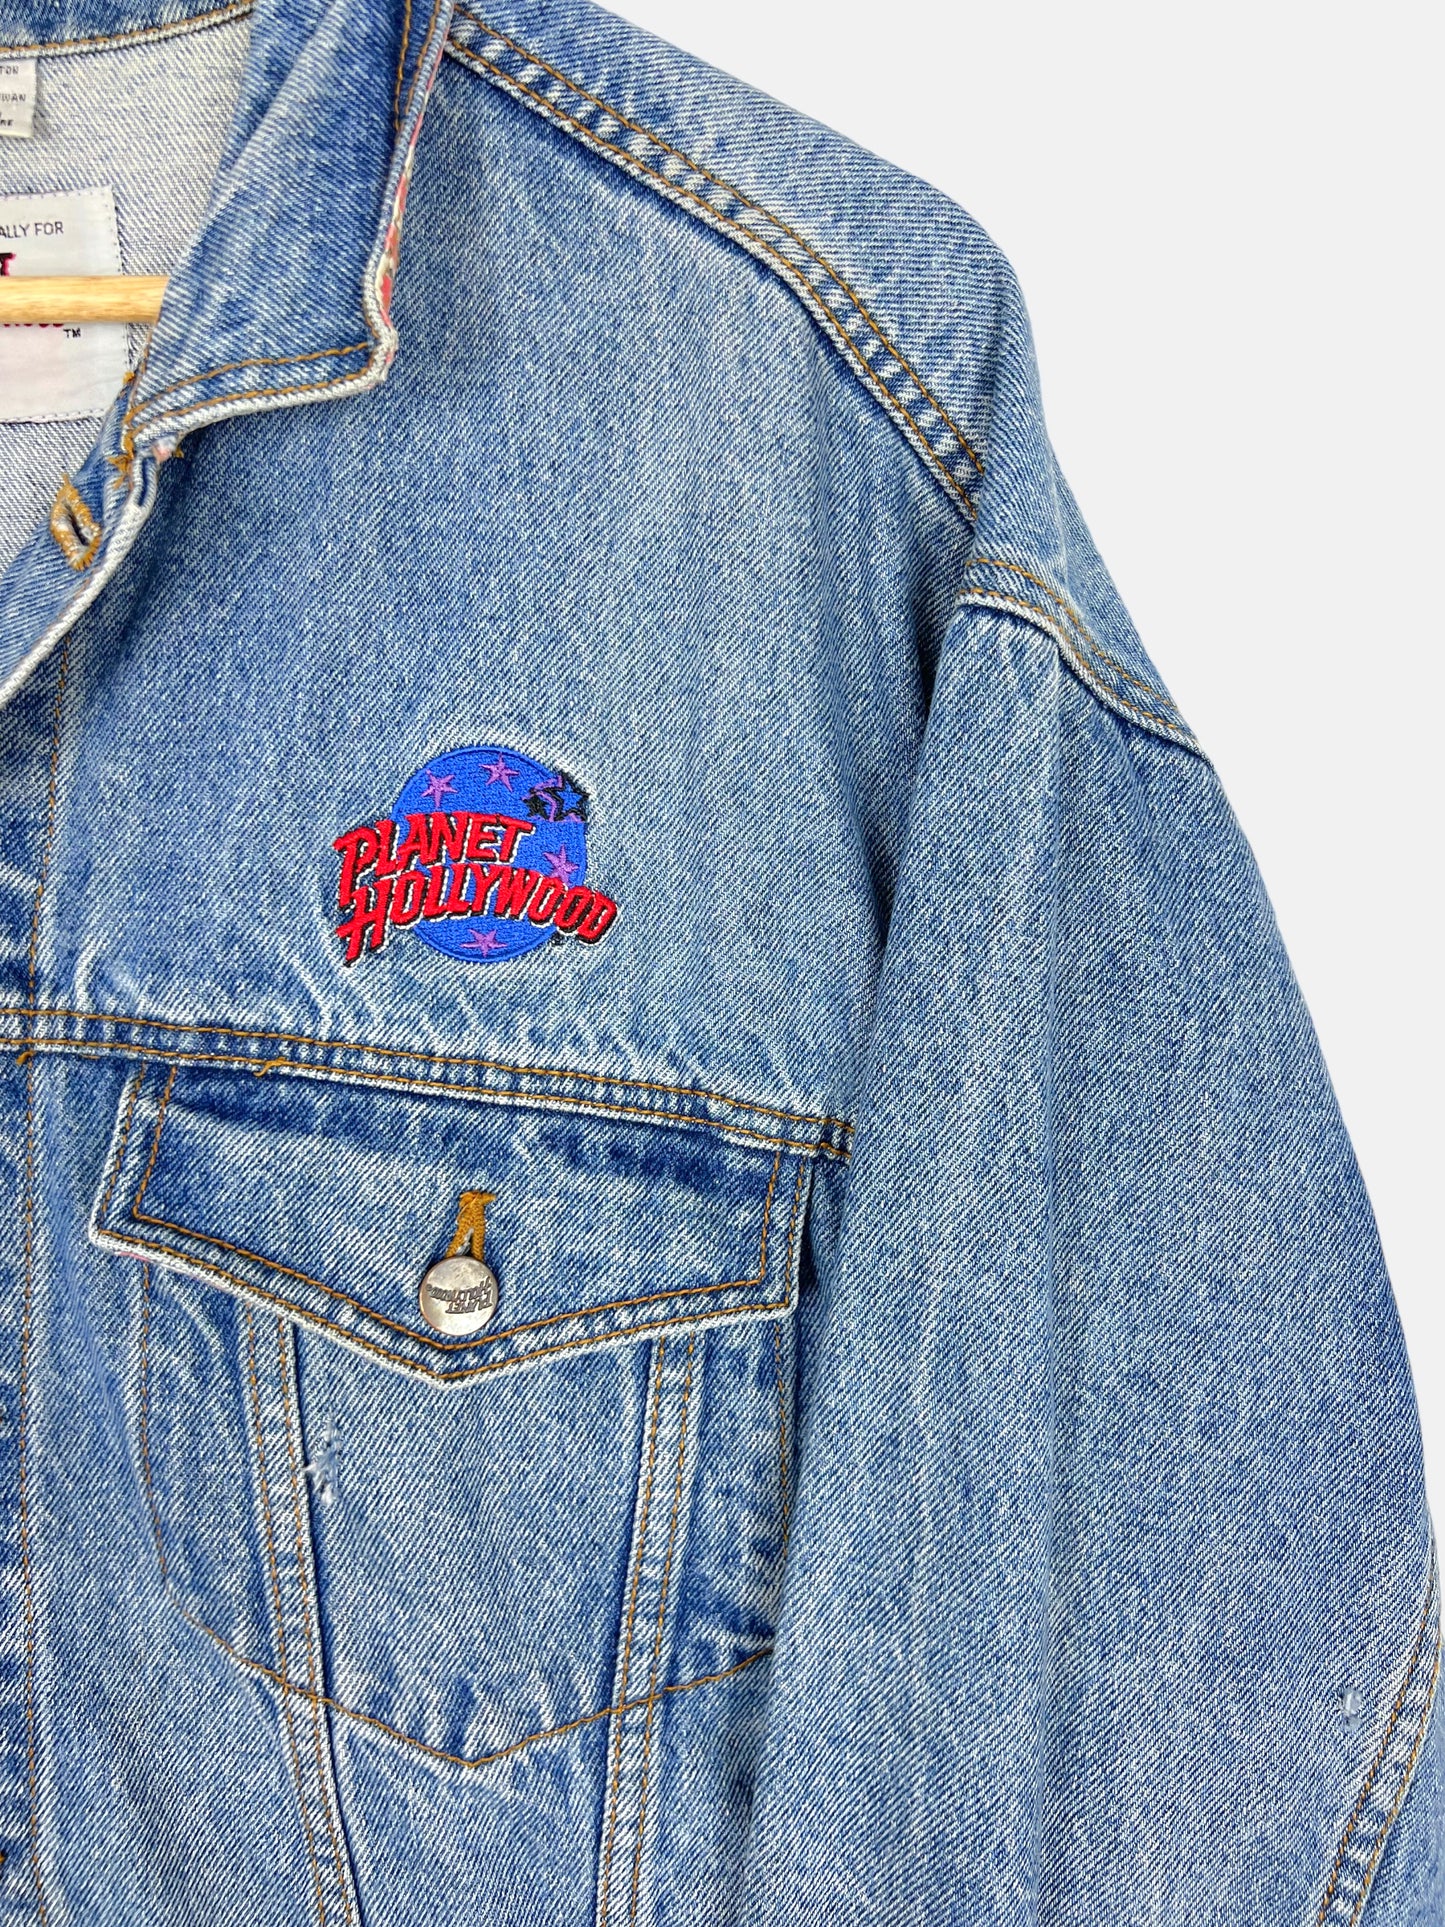 90's Planet Hollywood Chicago Embroidered Vintage Denim Jacket Size M